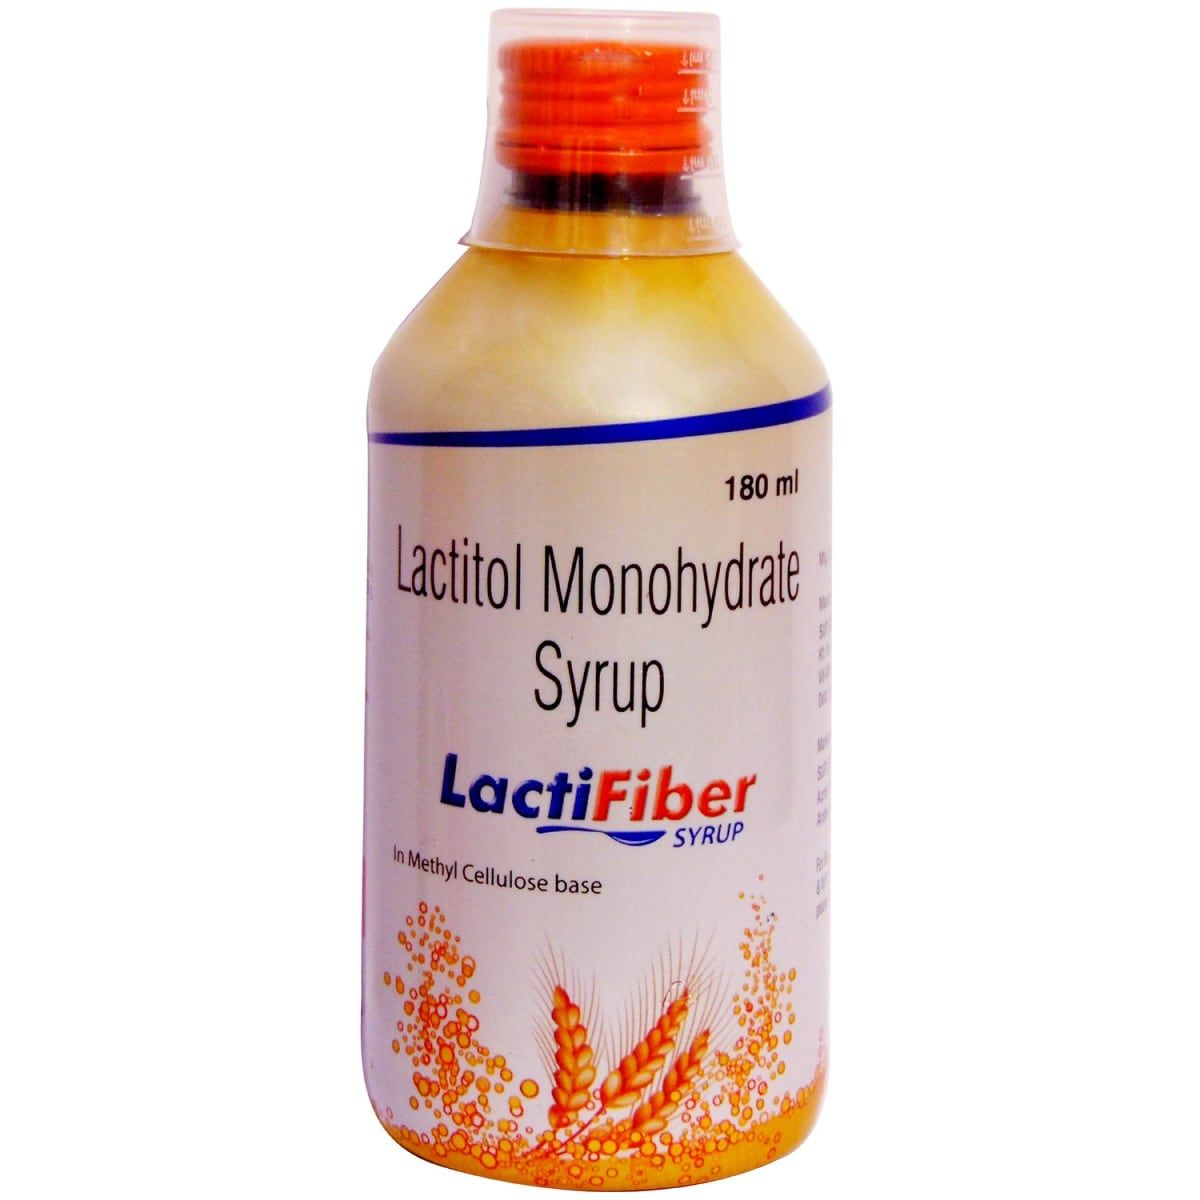 Buy Lactifiber Syrup 180 ml Online